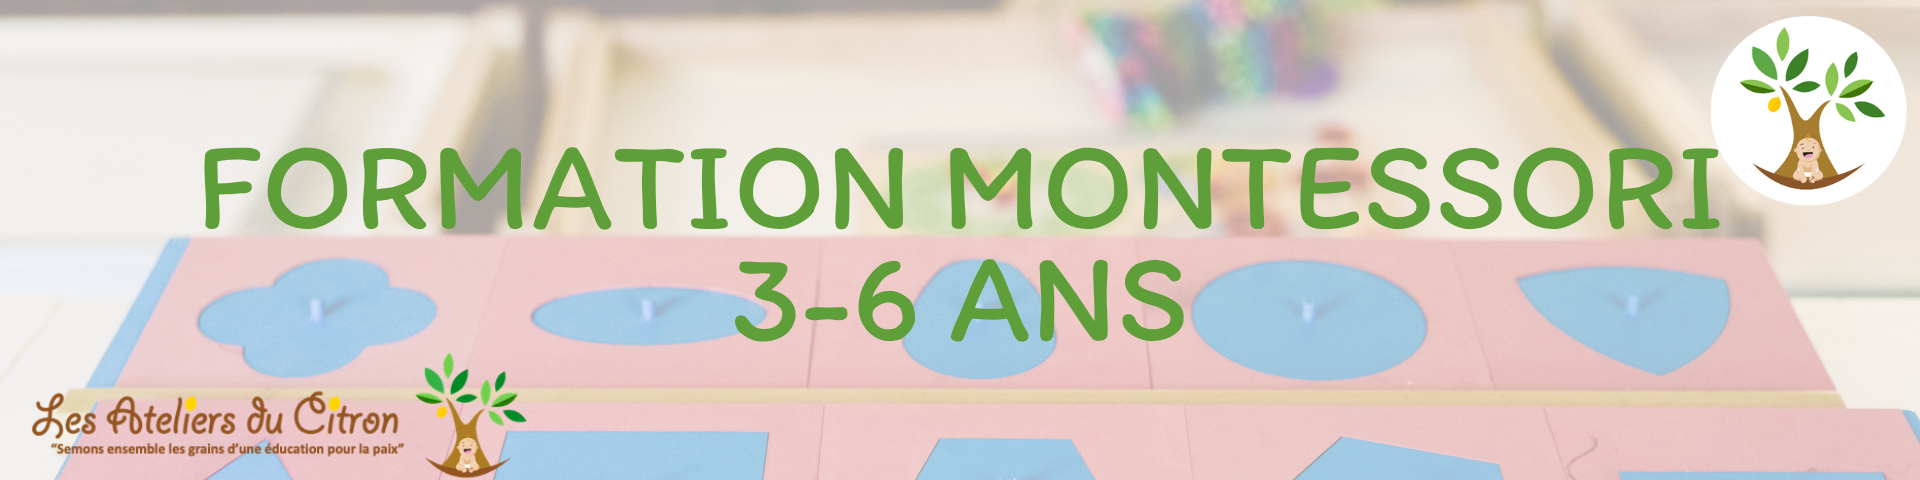 Formation Montessori 3-6 ans